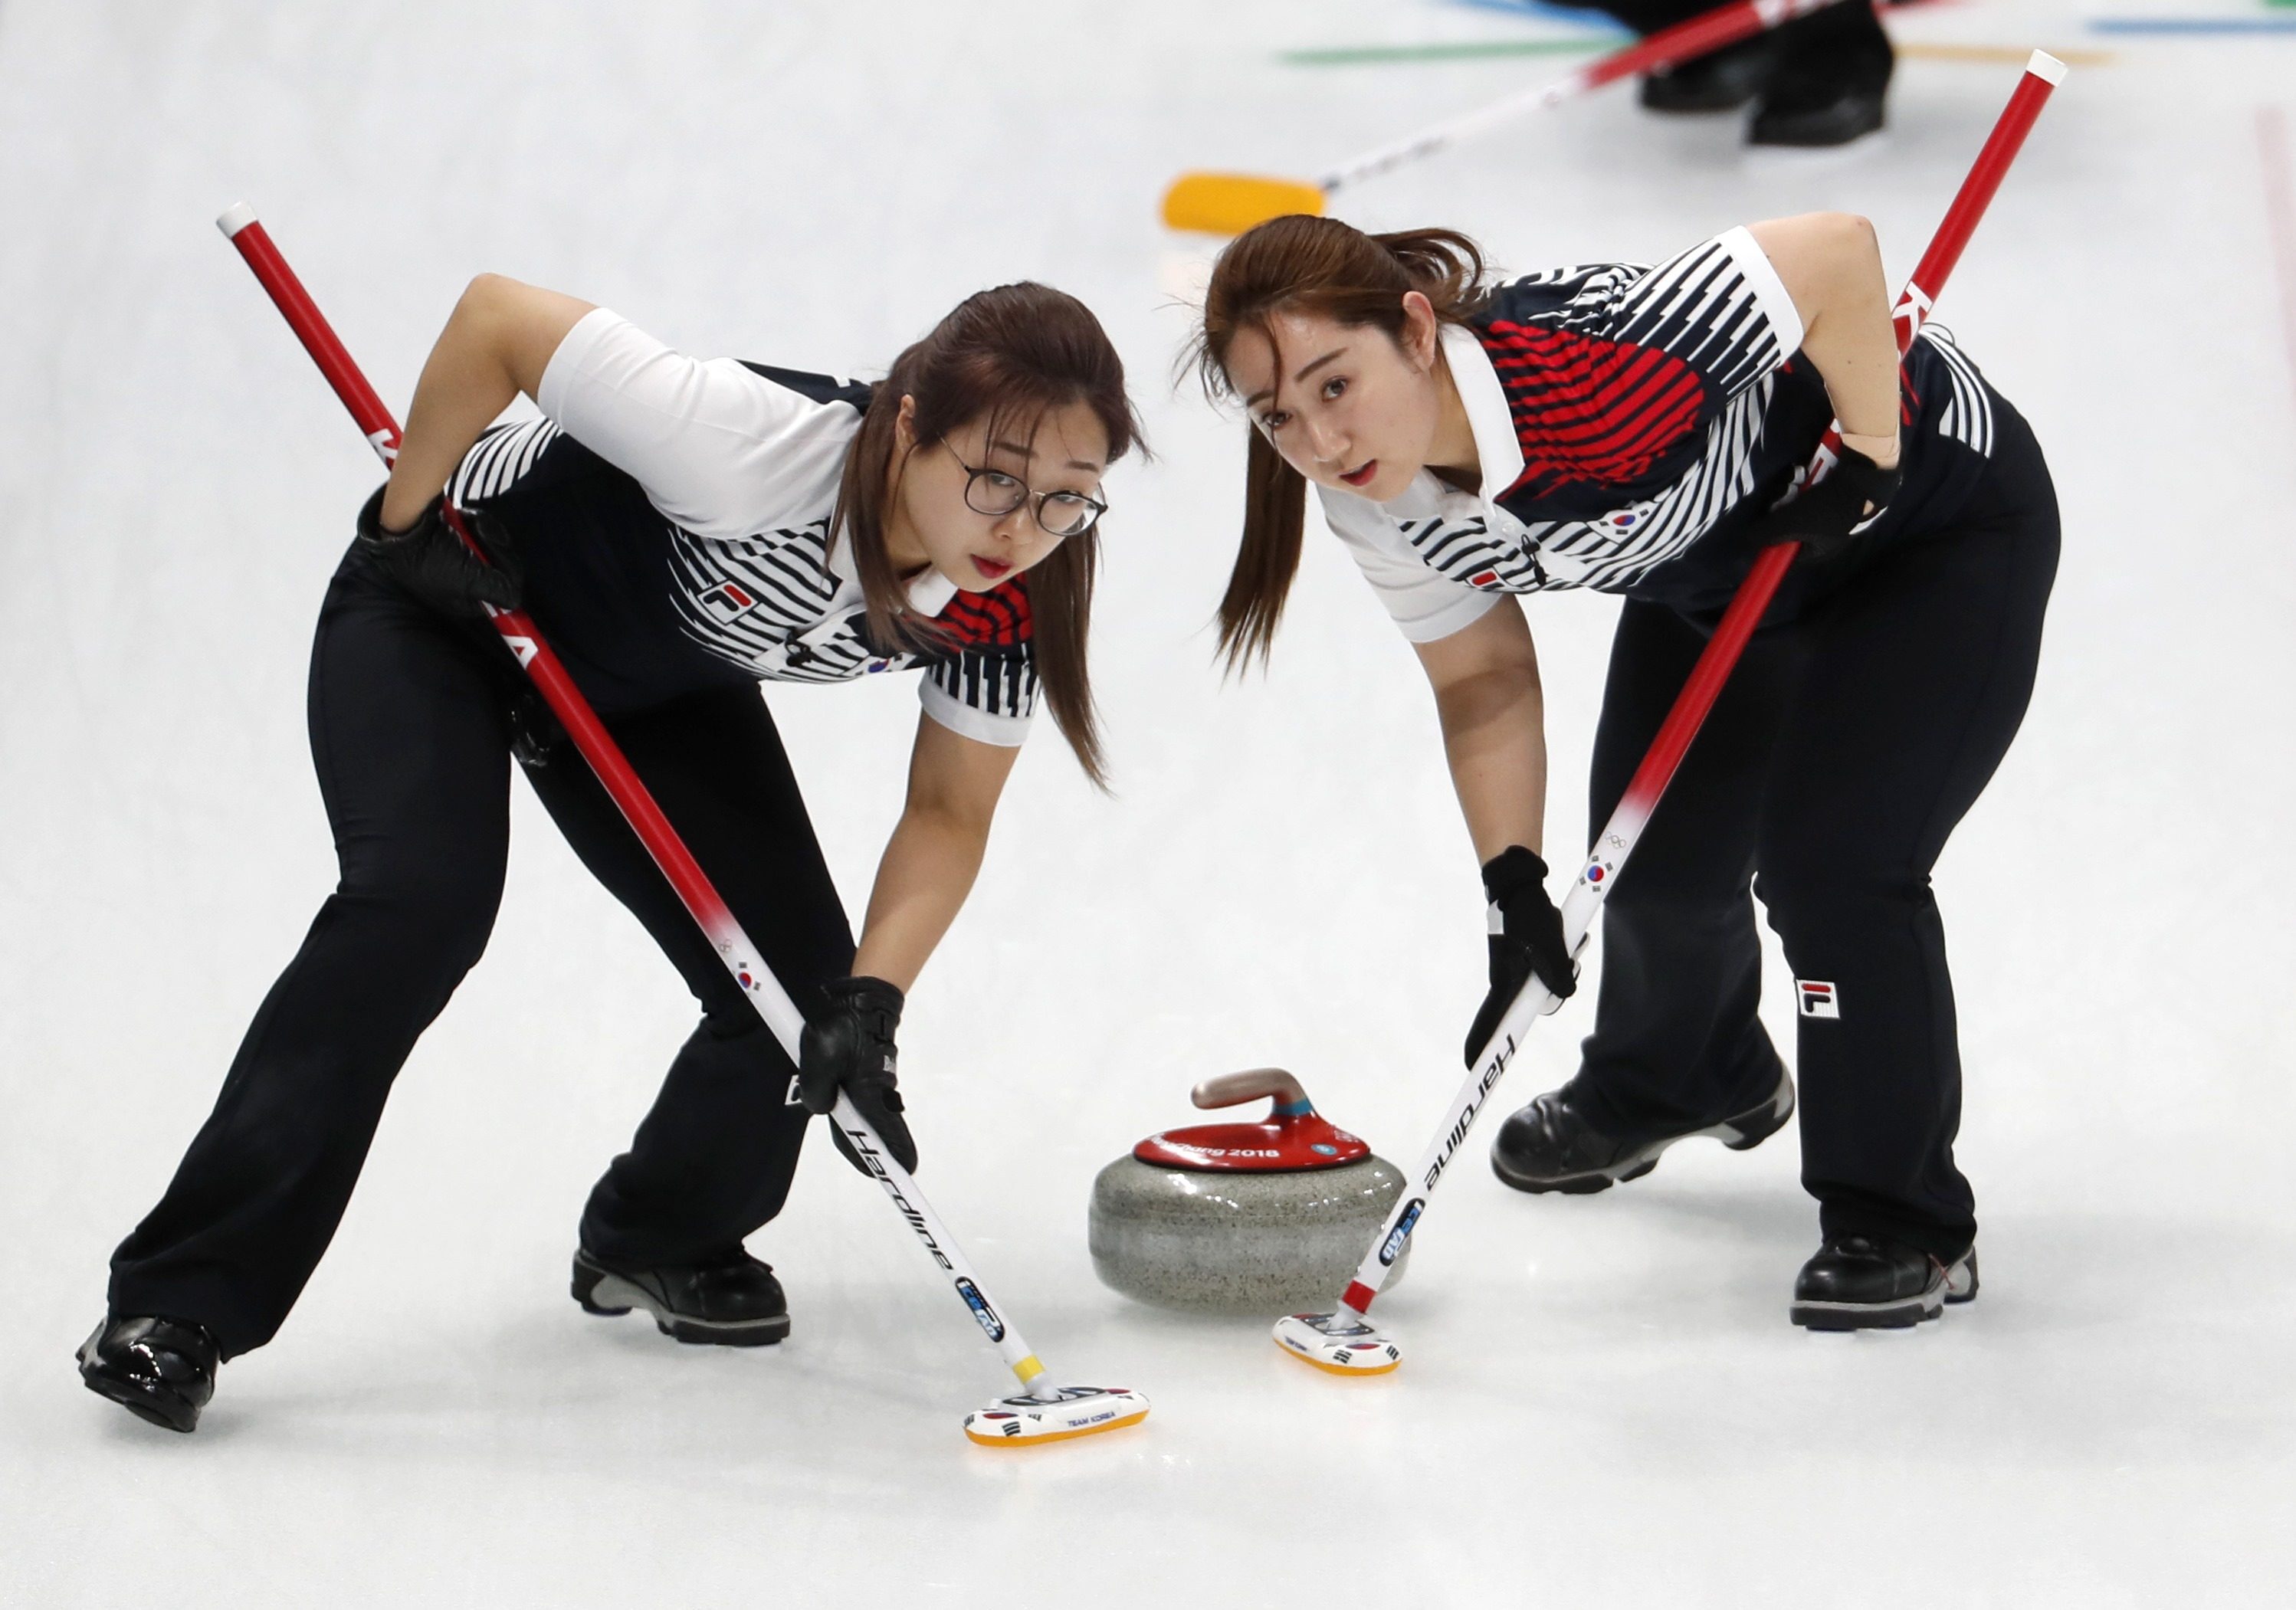 Sweden's Olympic curling teams named for Beijing 2022